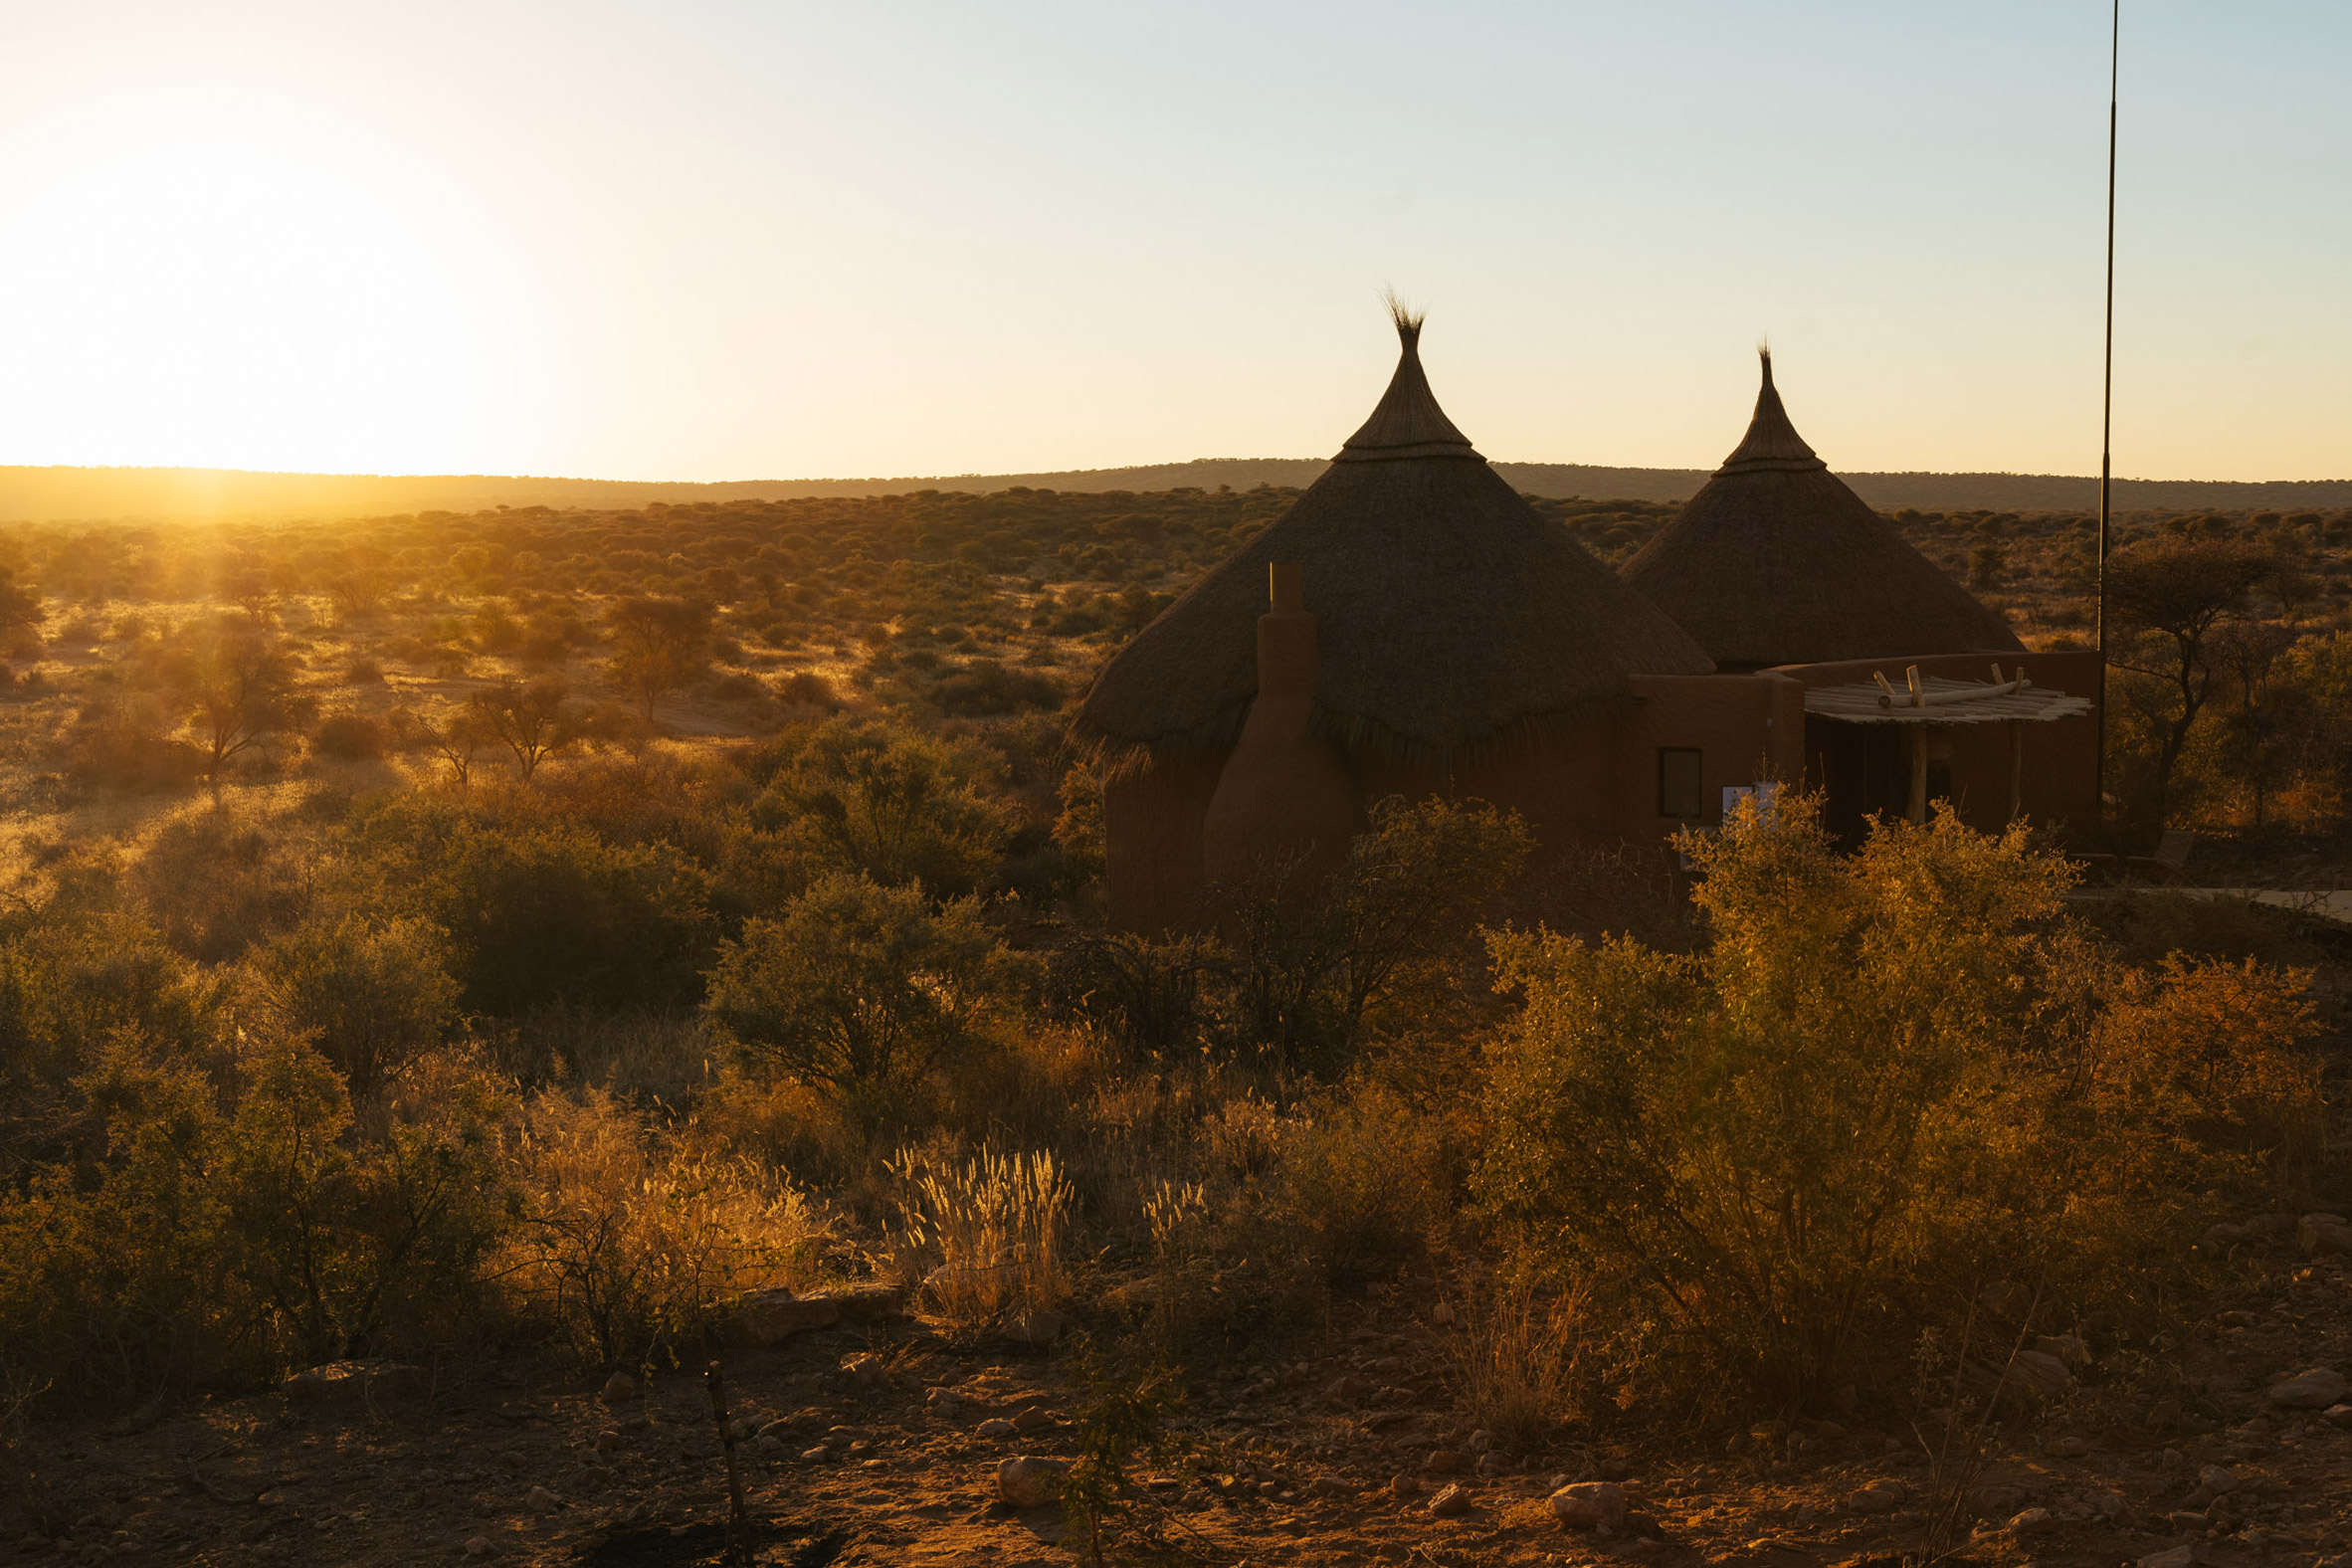 The Omaanga lodge in Namibia